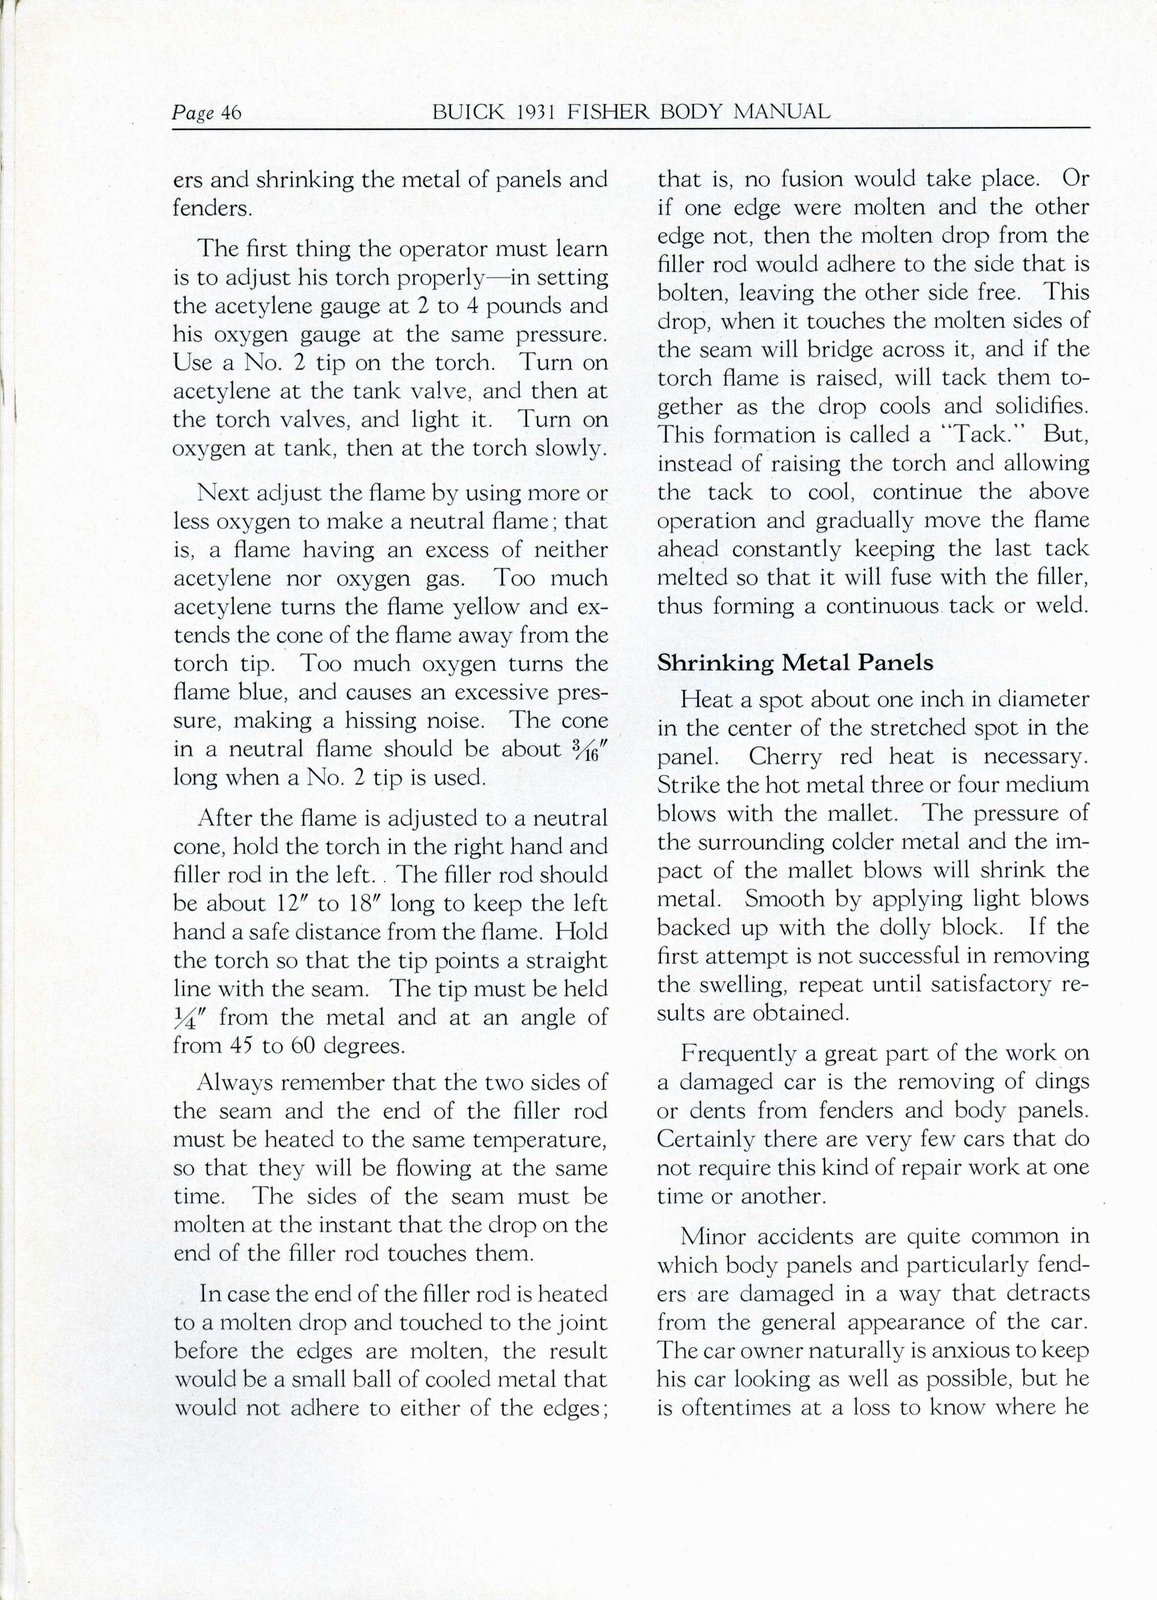 n_1931 Buick Fisher Body Manual-46.jpg